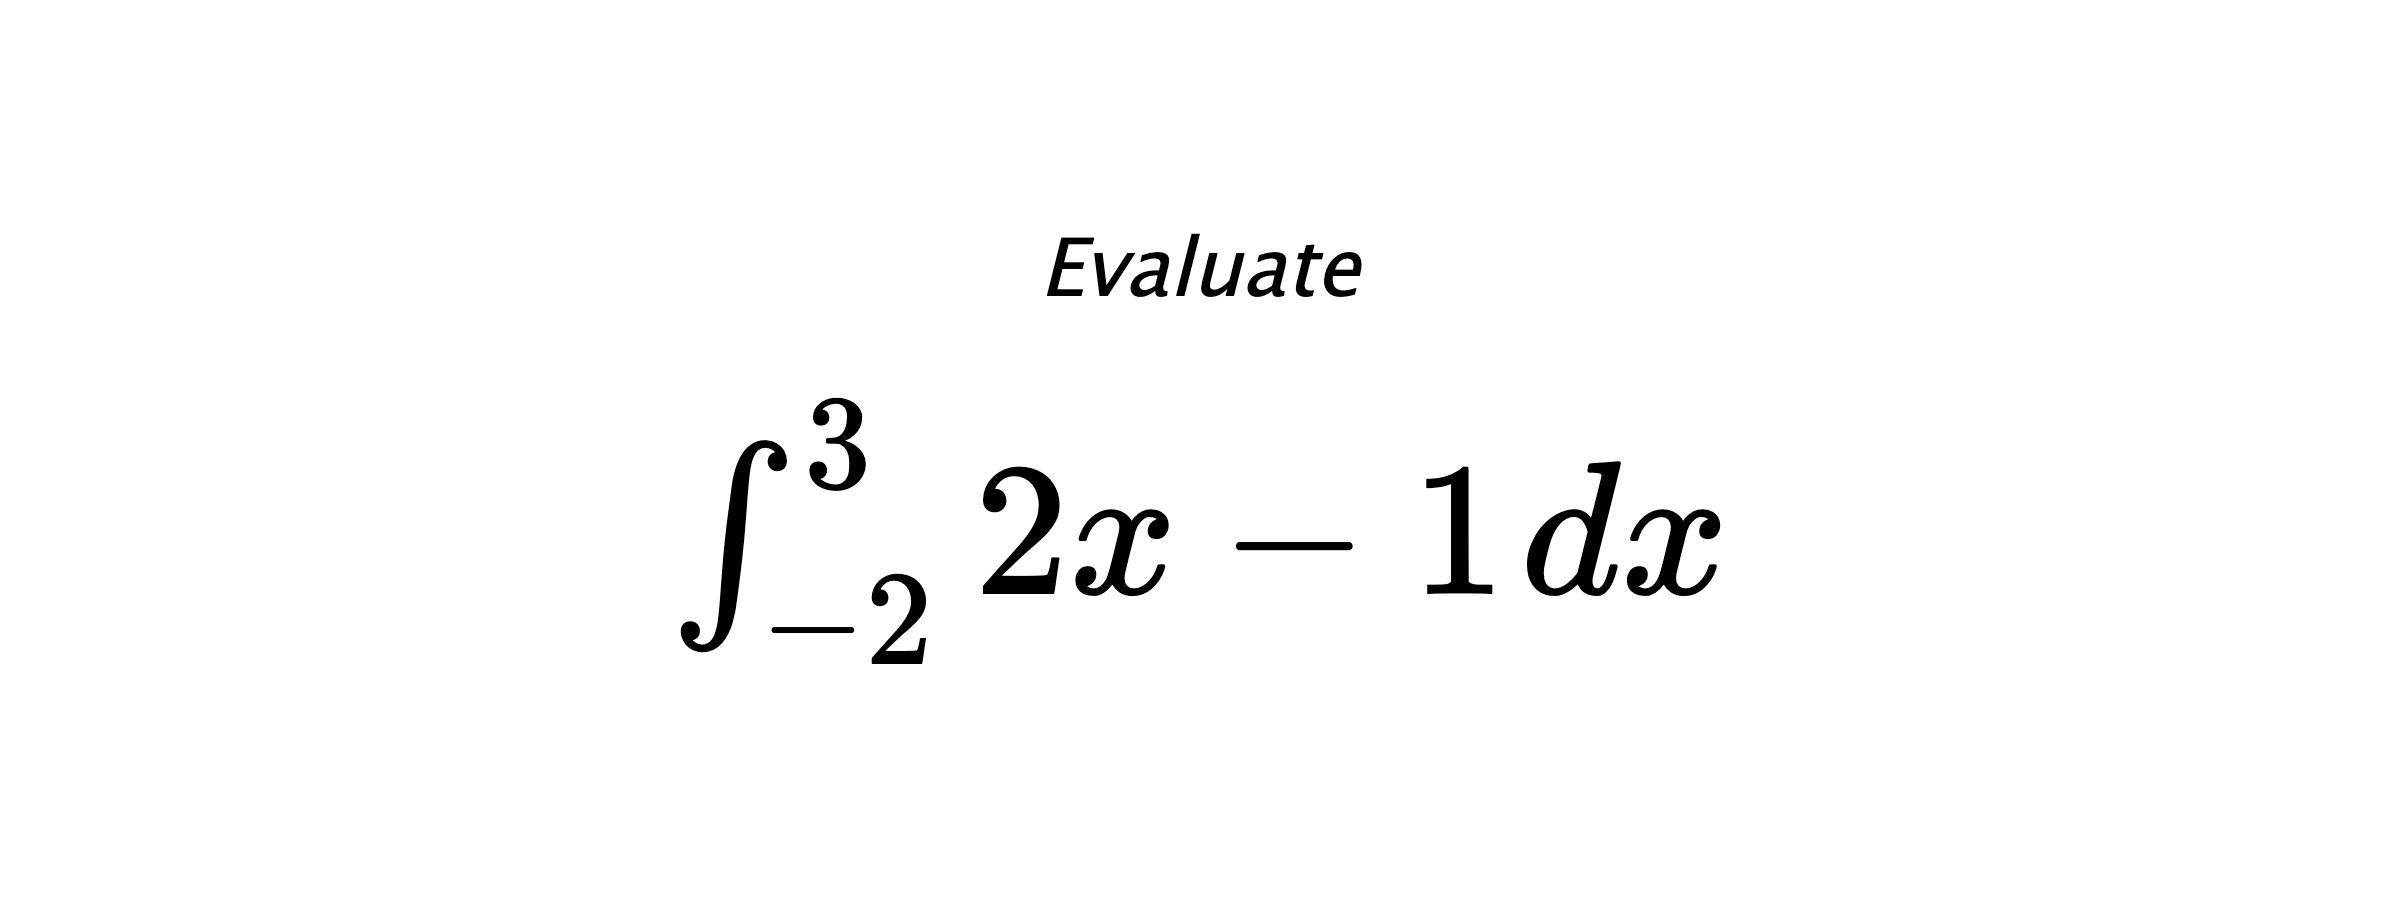 Evaluate $ \int_{-2}^{3} 2x-1 \hspace{0.2cm} dx $